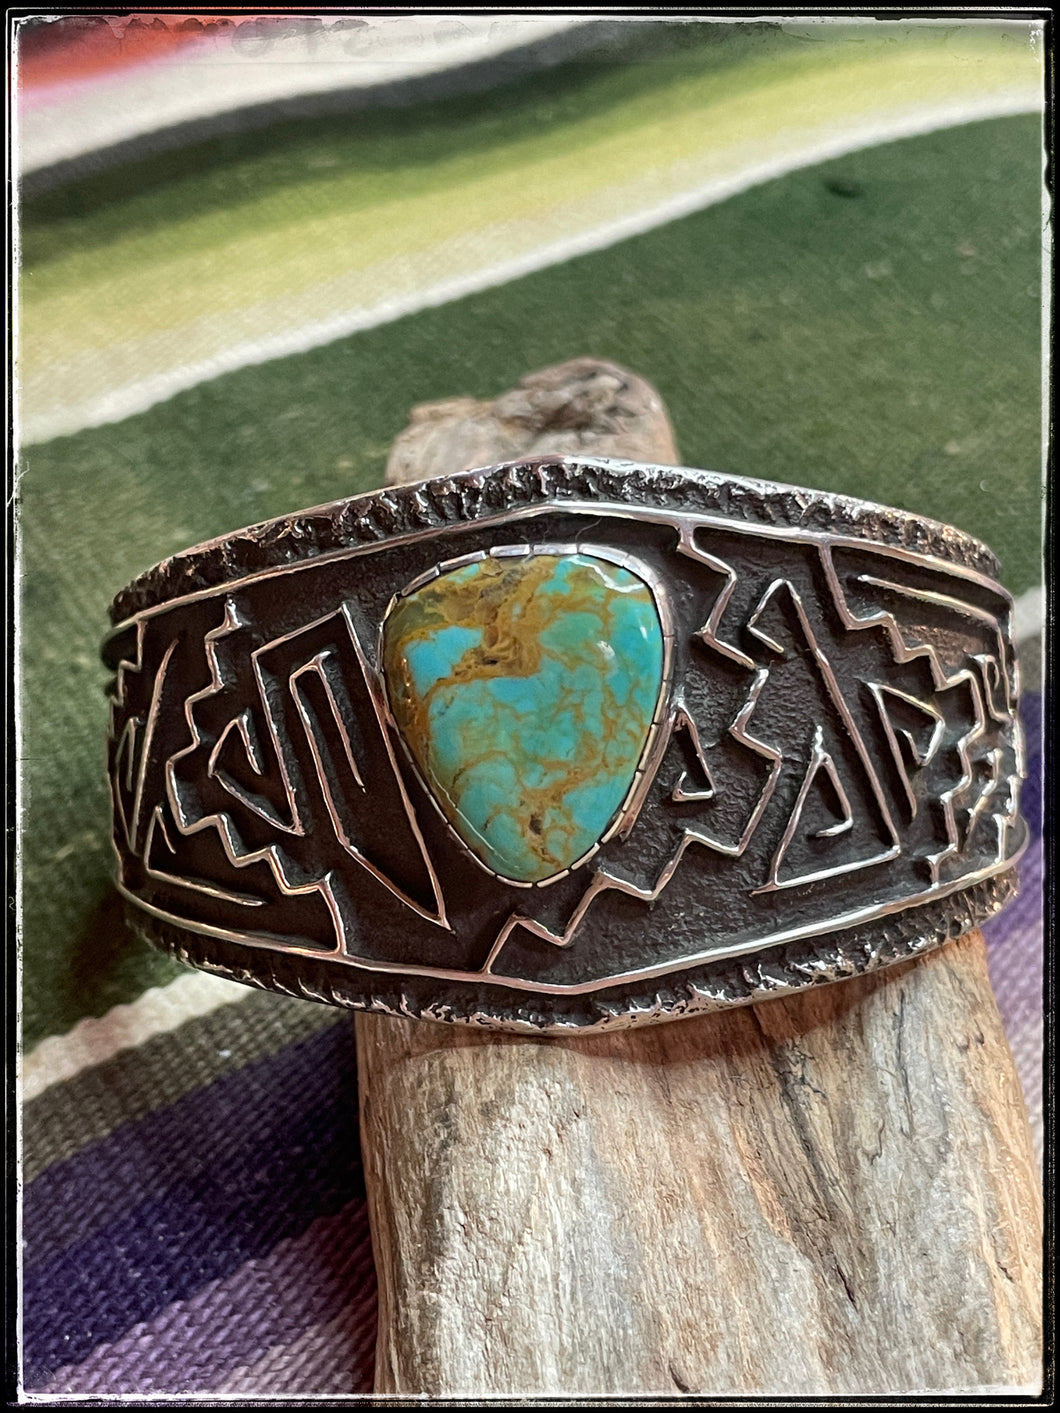 Del Arviso sterling silver and turquoise tufa cast cuff